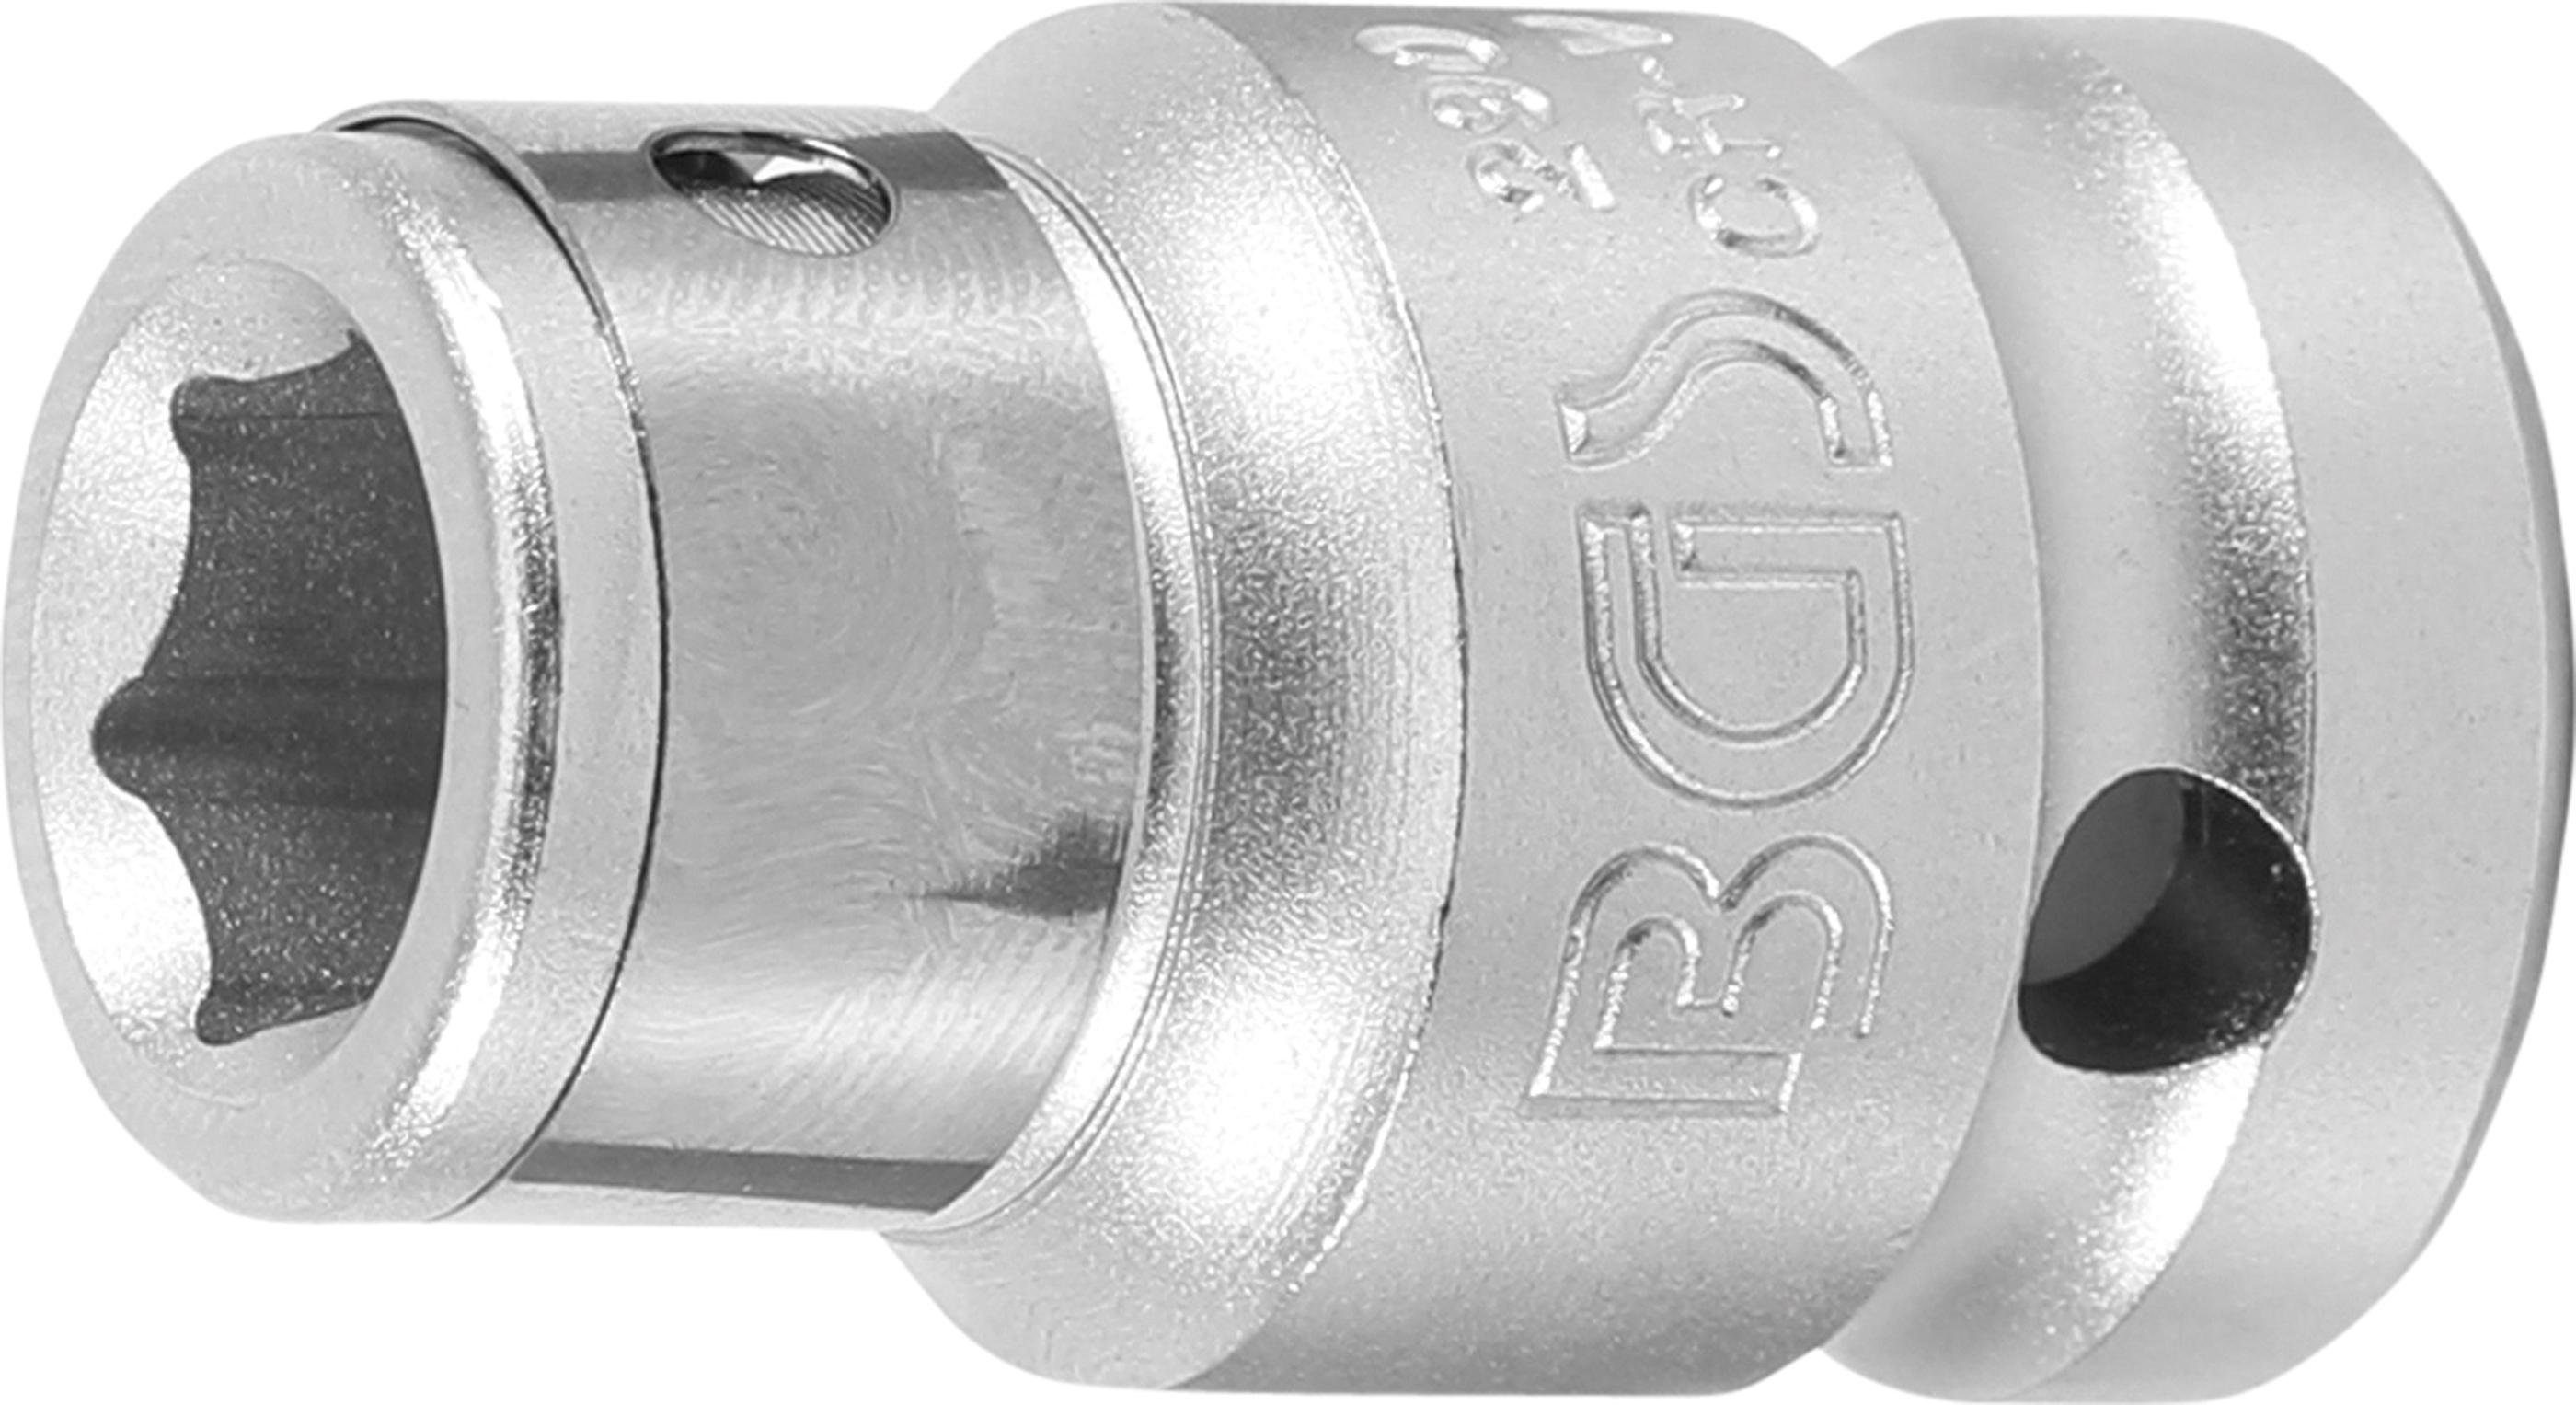 BGS technic Bit-Schraubendreher Bit-Adapter mit Haltekugel, Innenvierkant 12,5 mm (1/2), Innensechskant 10 mm (3/8)